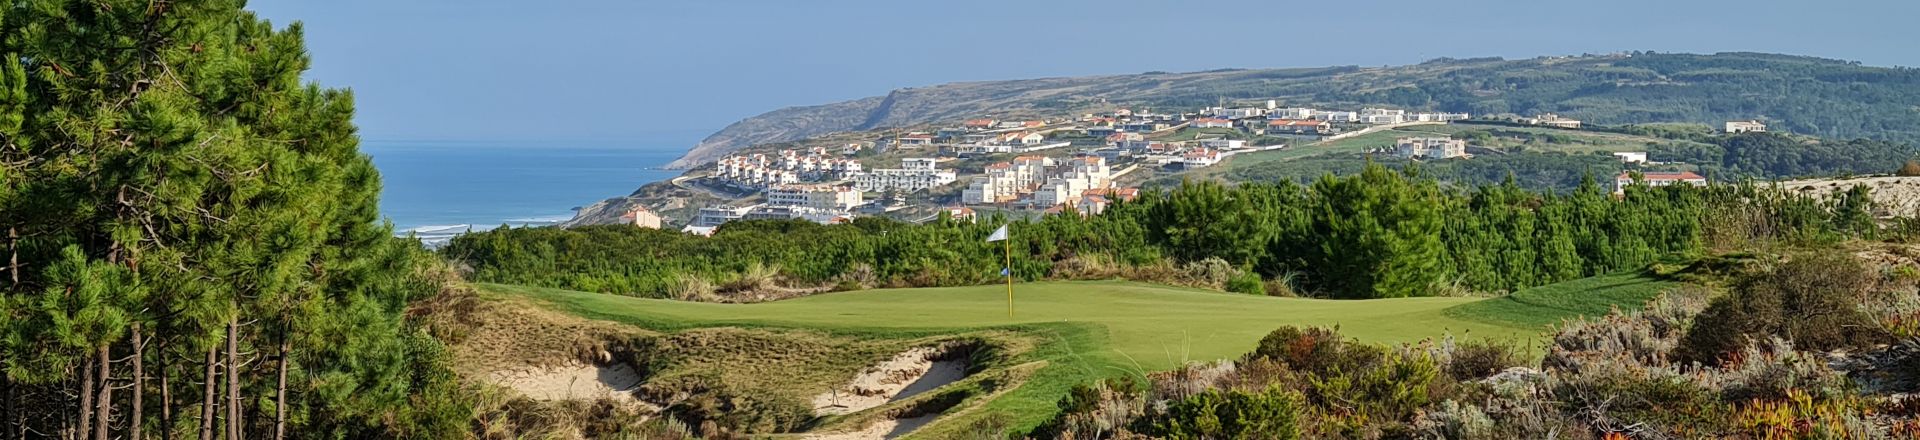 West Cliffs Golf Course near Lisbon in Portugal